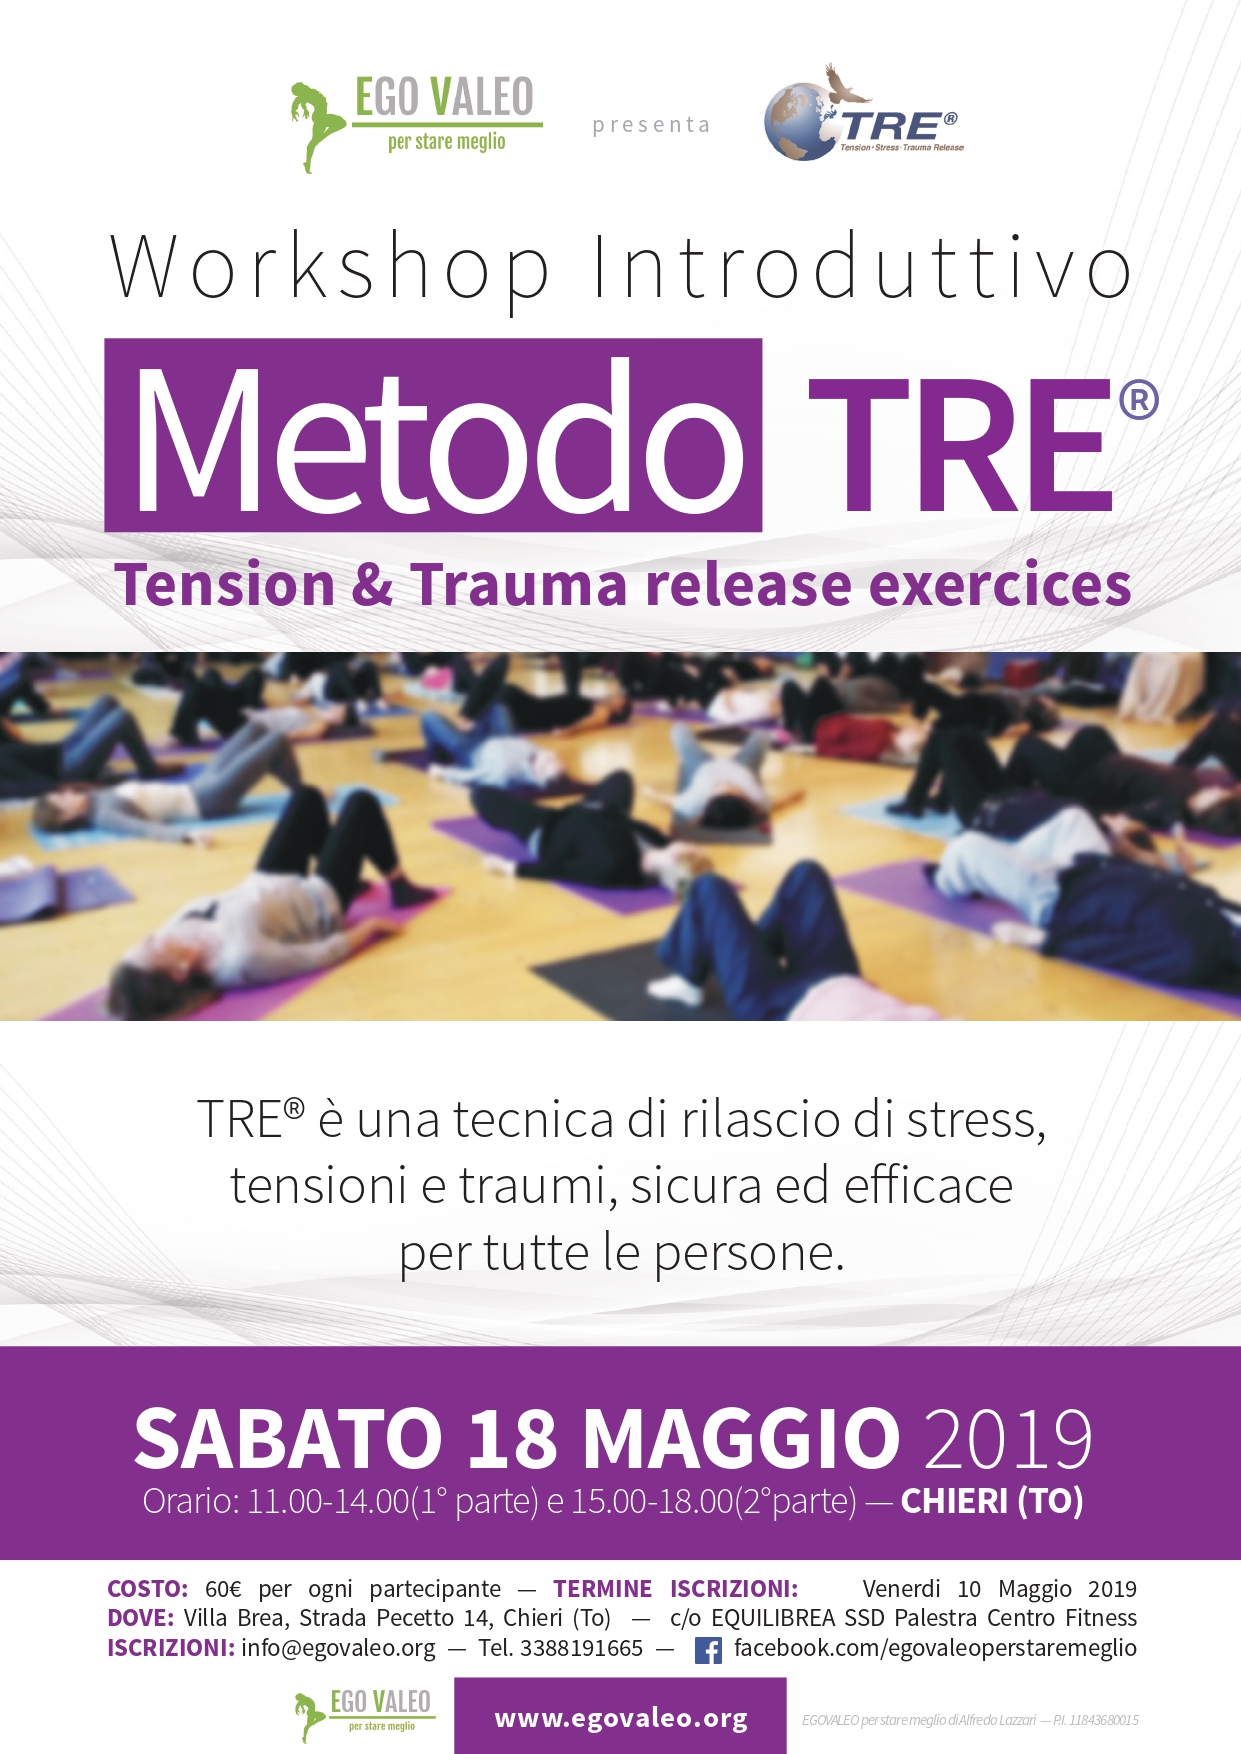 Sabato 18 Maggio 2019 Seminario Introduttivo Metodo TRE – Tension & Trauma release exercices